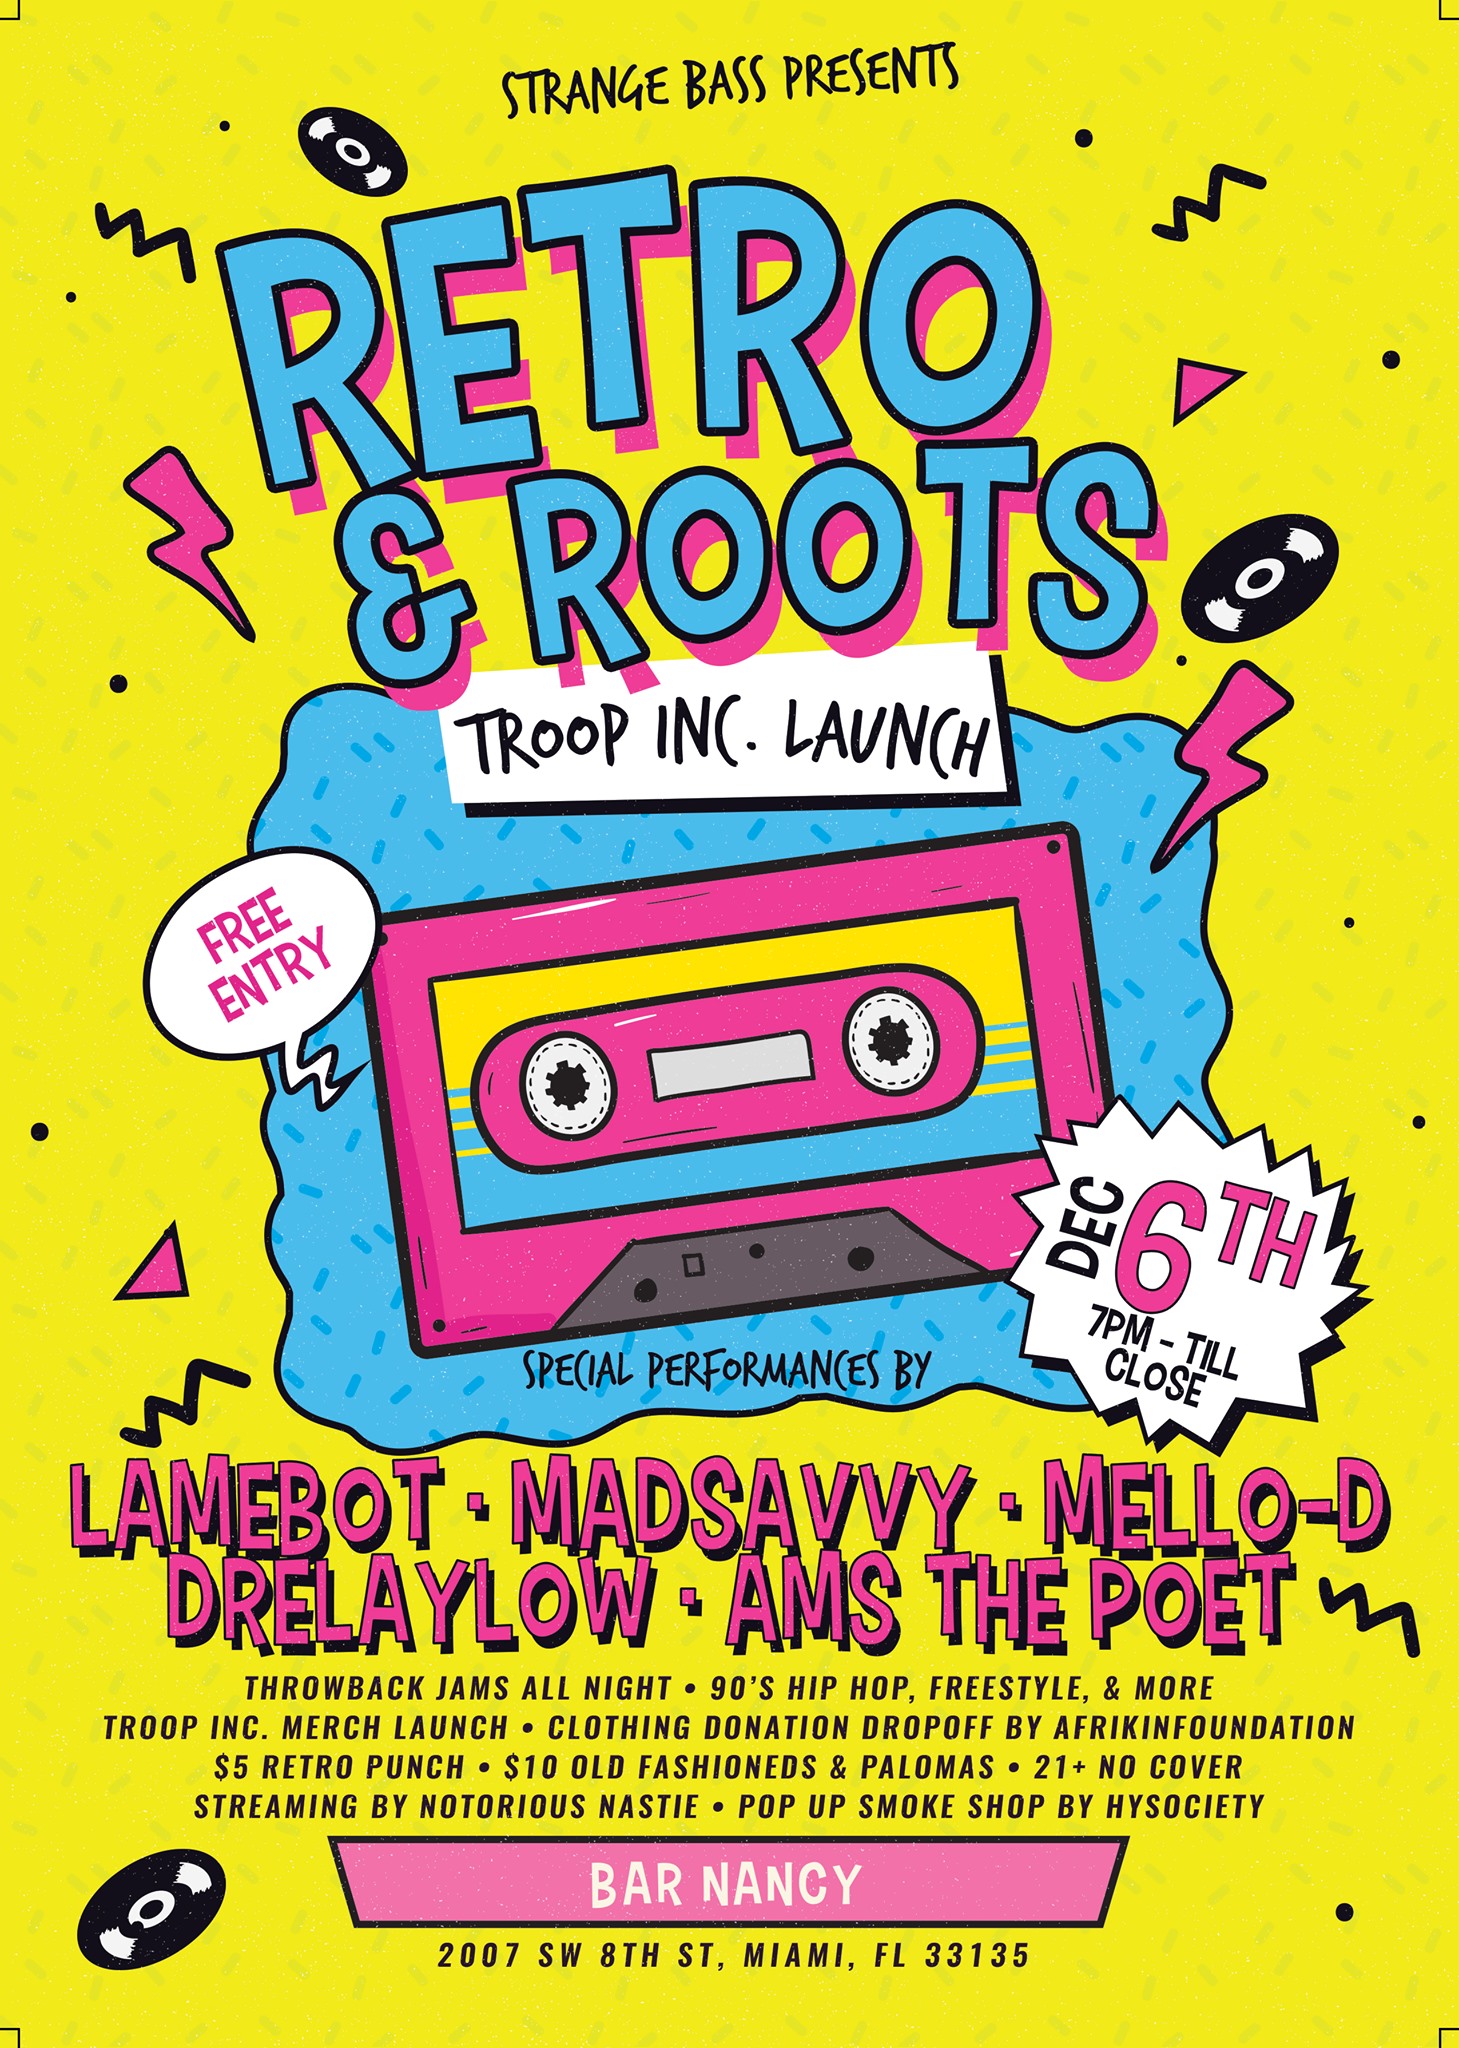 Retro & Roots (Troop Inc. Launch)at Bar Nancy